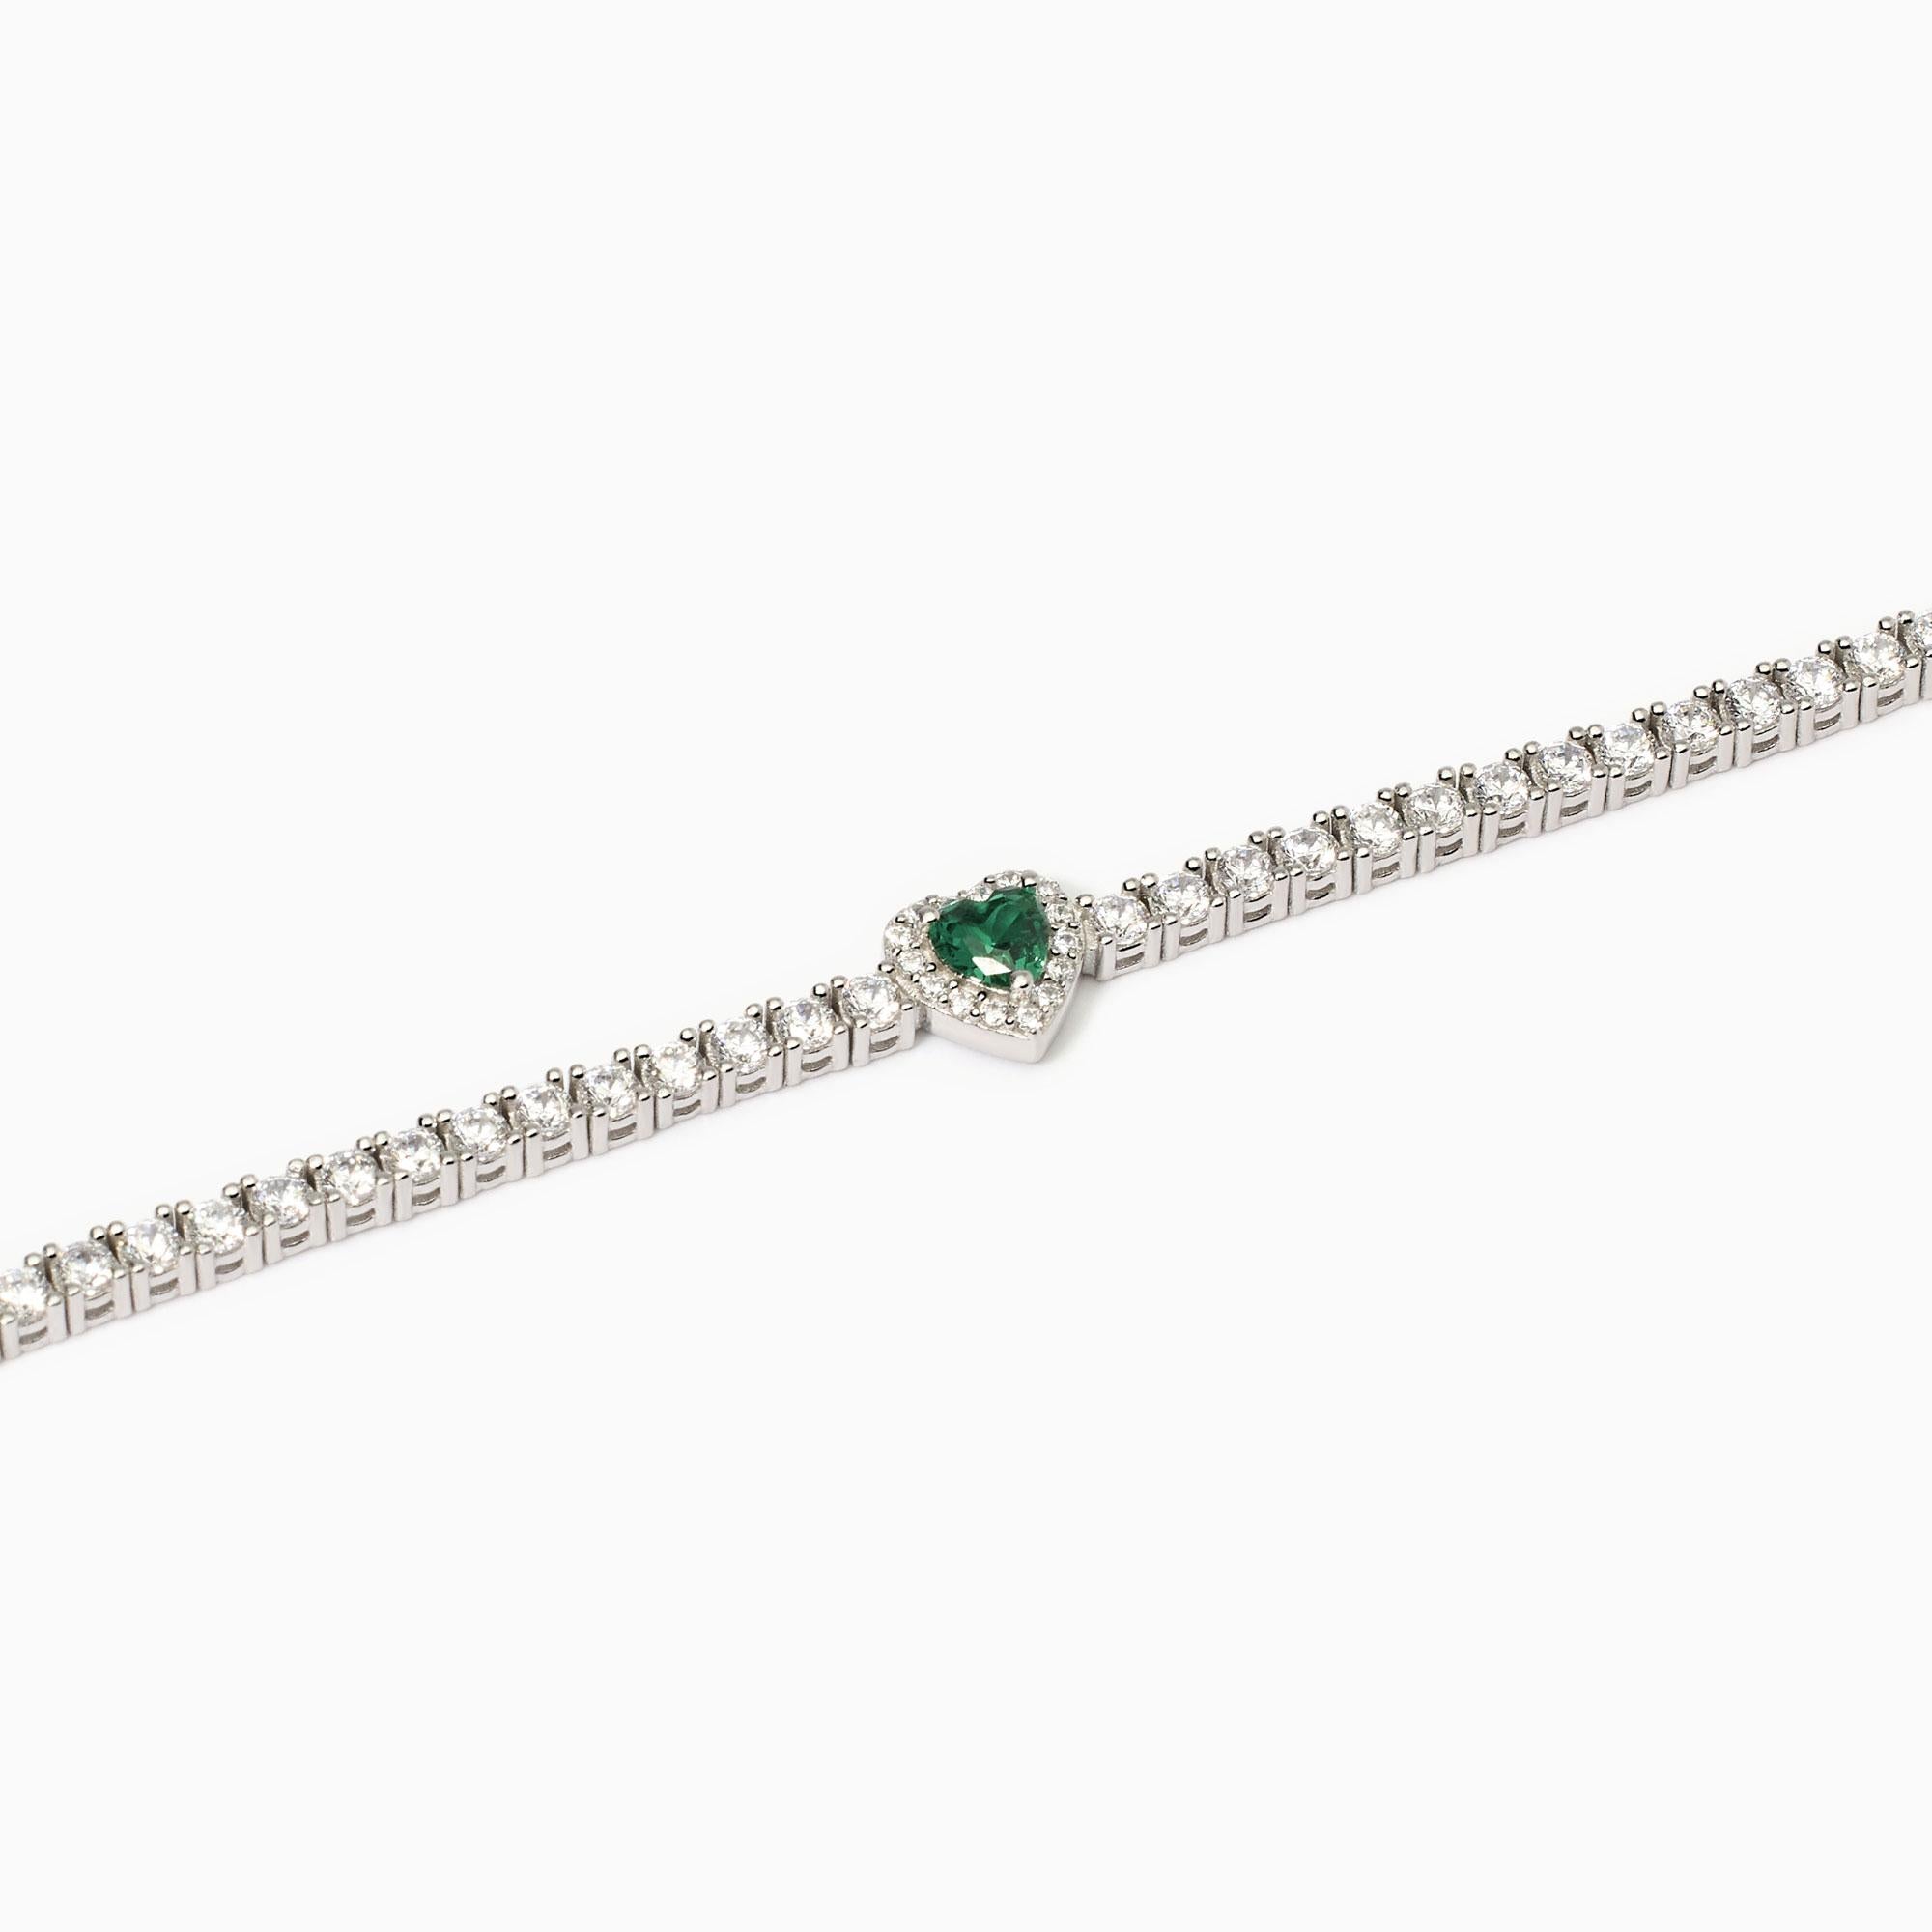 Mabina Donna - Women's tennis bracelet with emerald LOVE AFFAIR - 533837-16